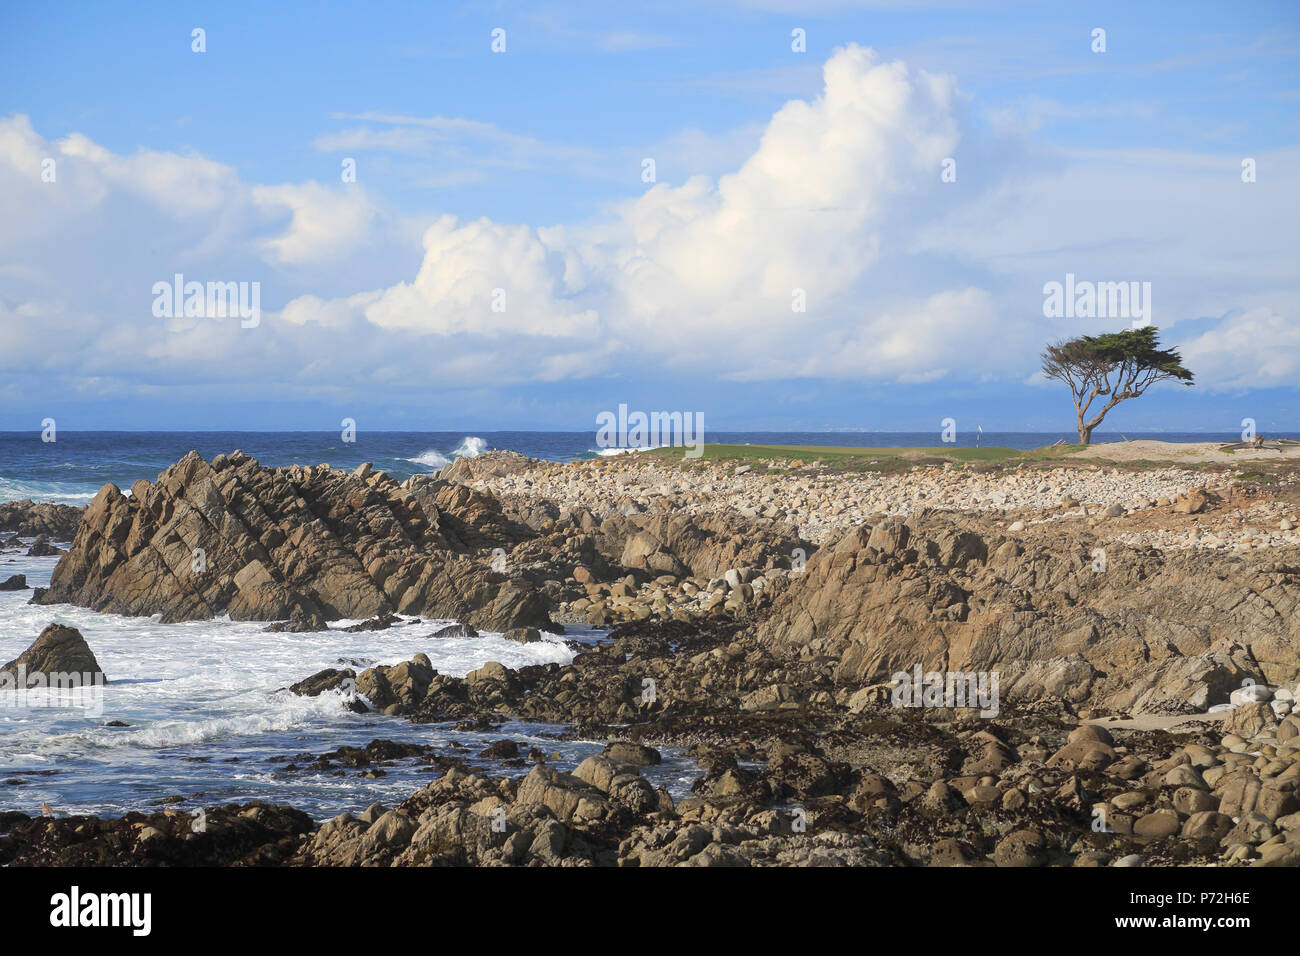 Rocky coastline and Monterey cypress tree, 17 Mile Drive, Pebble Beach, Monterey Peninsula, Pacific Ocean, California, United States of America Stock Photo